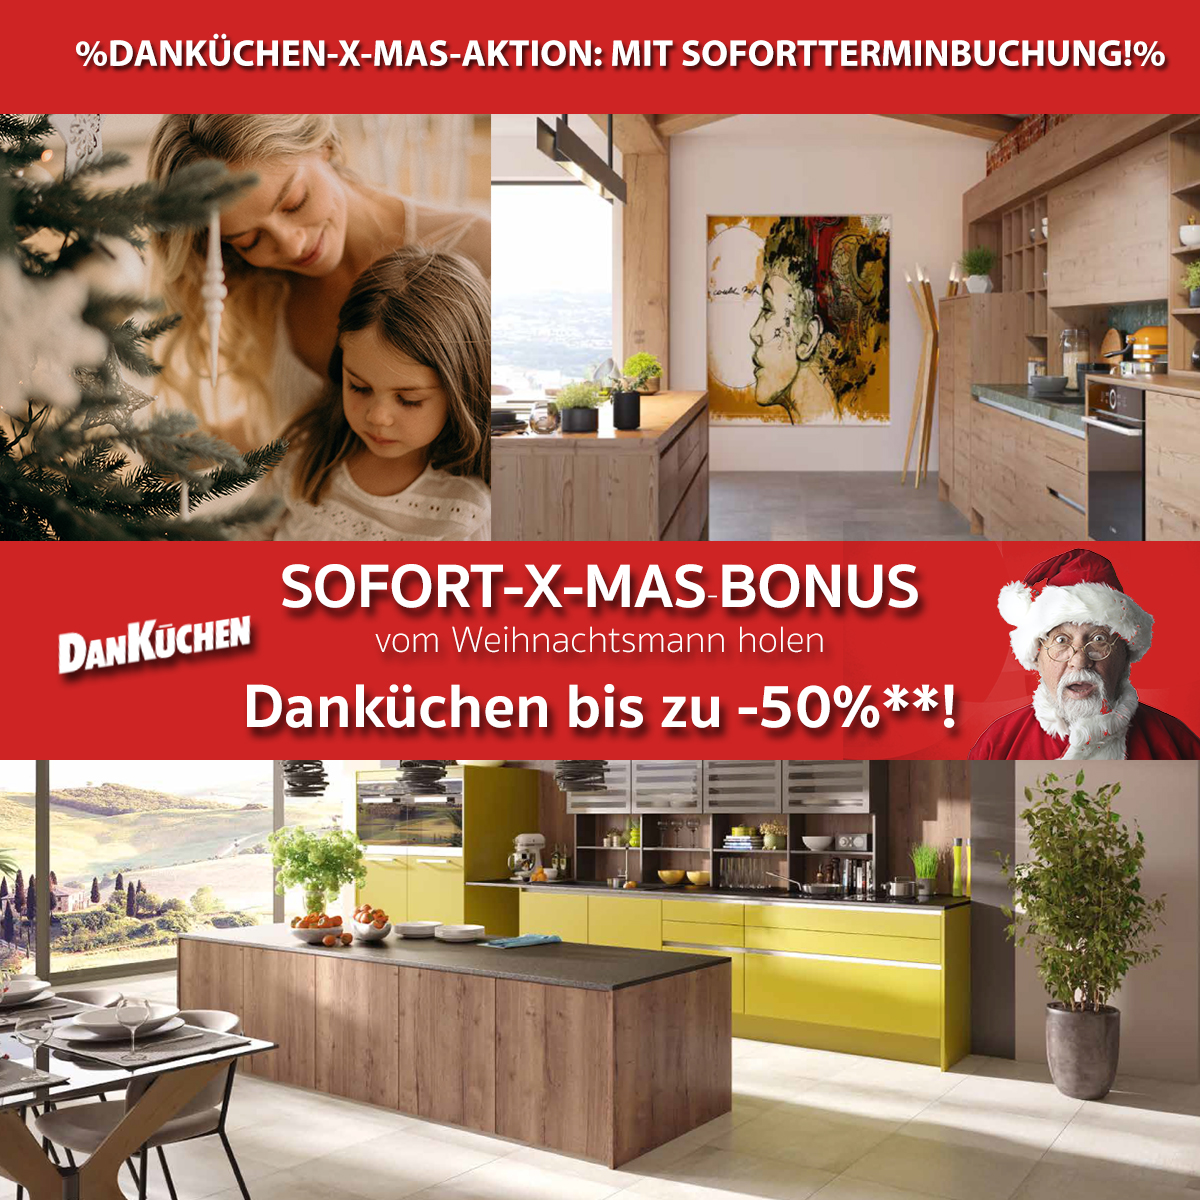 rodrix-dan-kuechen-fb-kampagne-soforttermin-x-mas-bonus-50-prozent